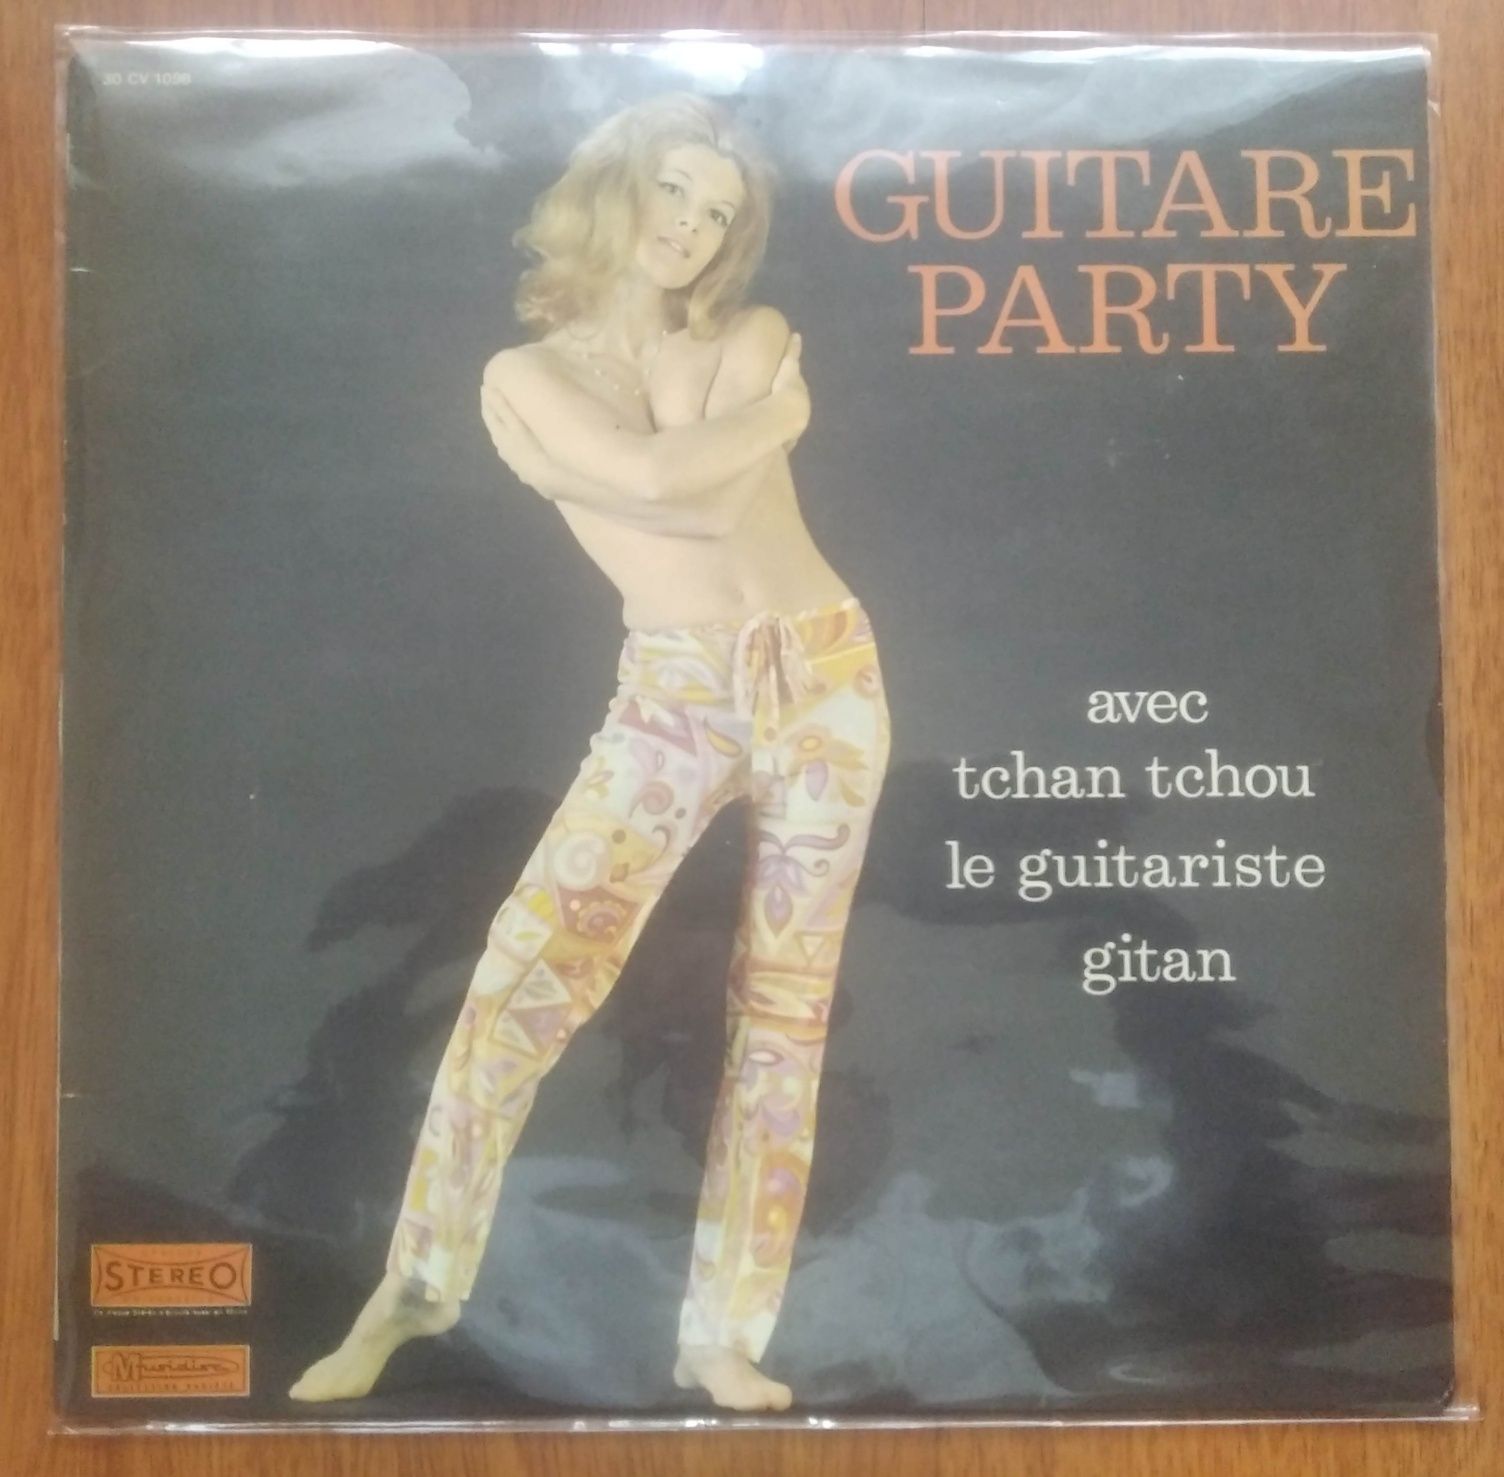 Disco de vinil "Guitare Party"